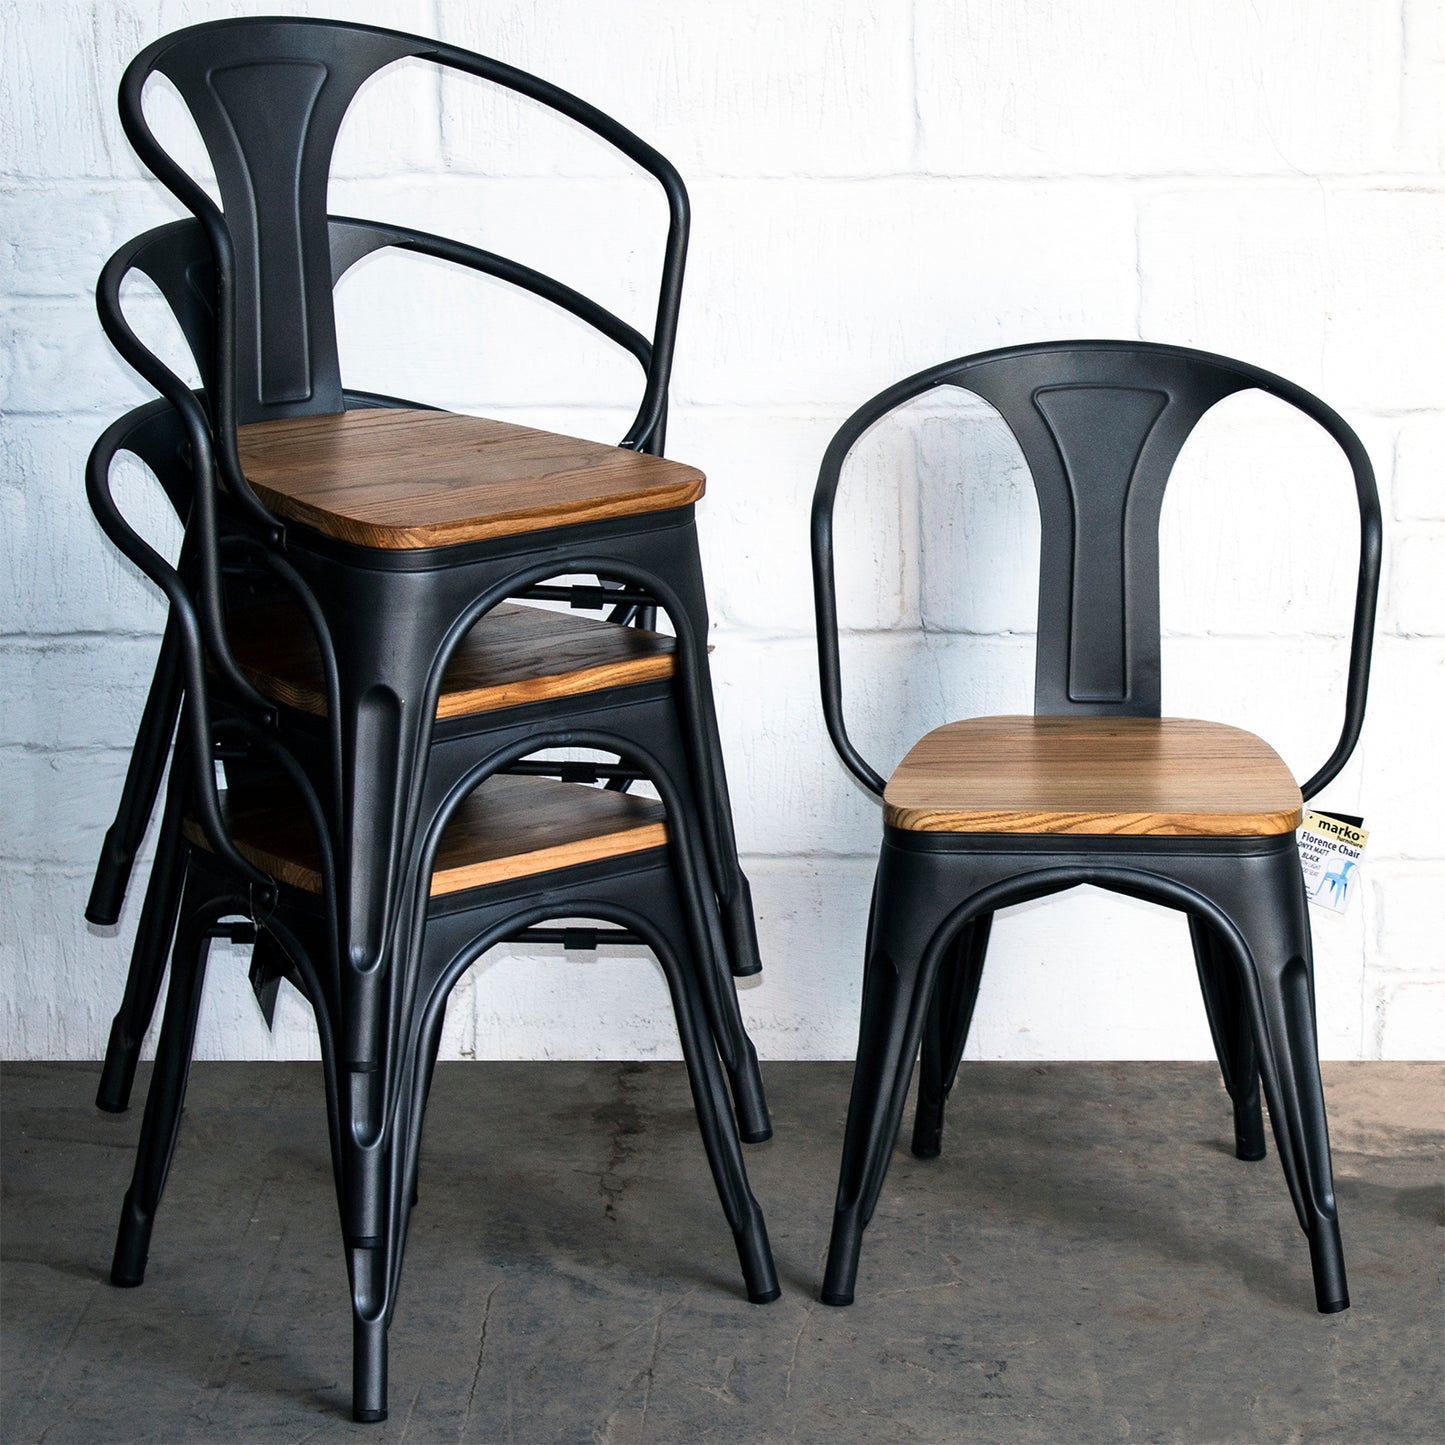 7PC Taranto Table, 2 Florence Chairs, 3 Rho Stools & Nuoro Bench Set - Onyx Matt Black